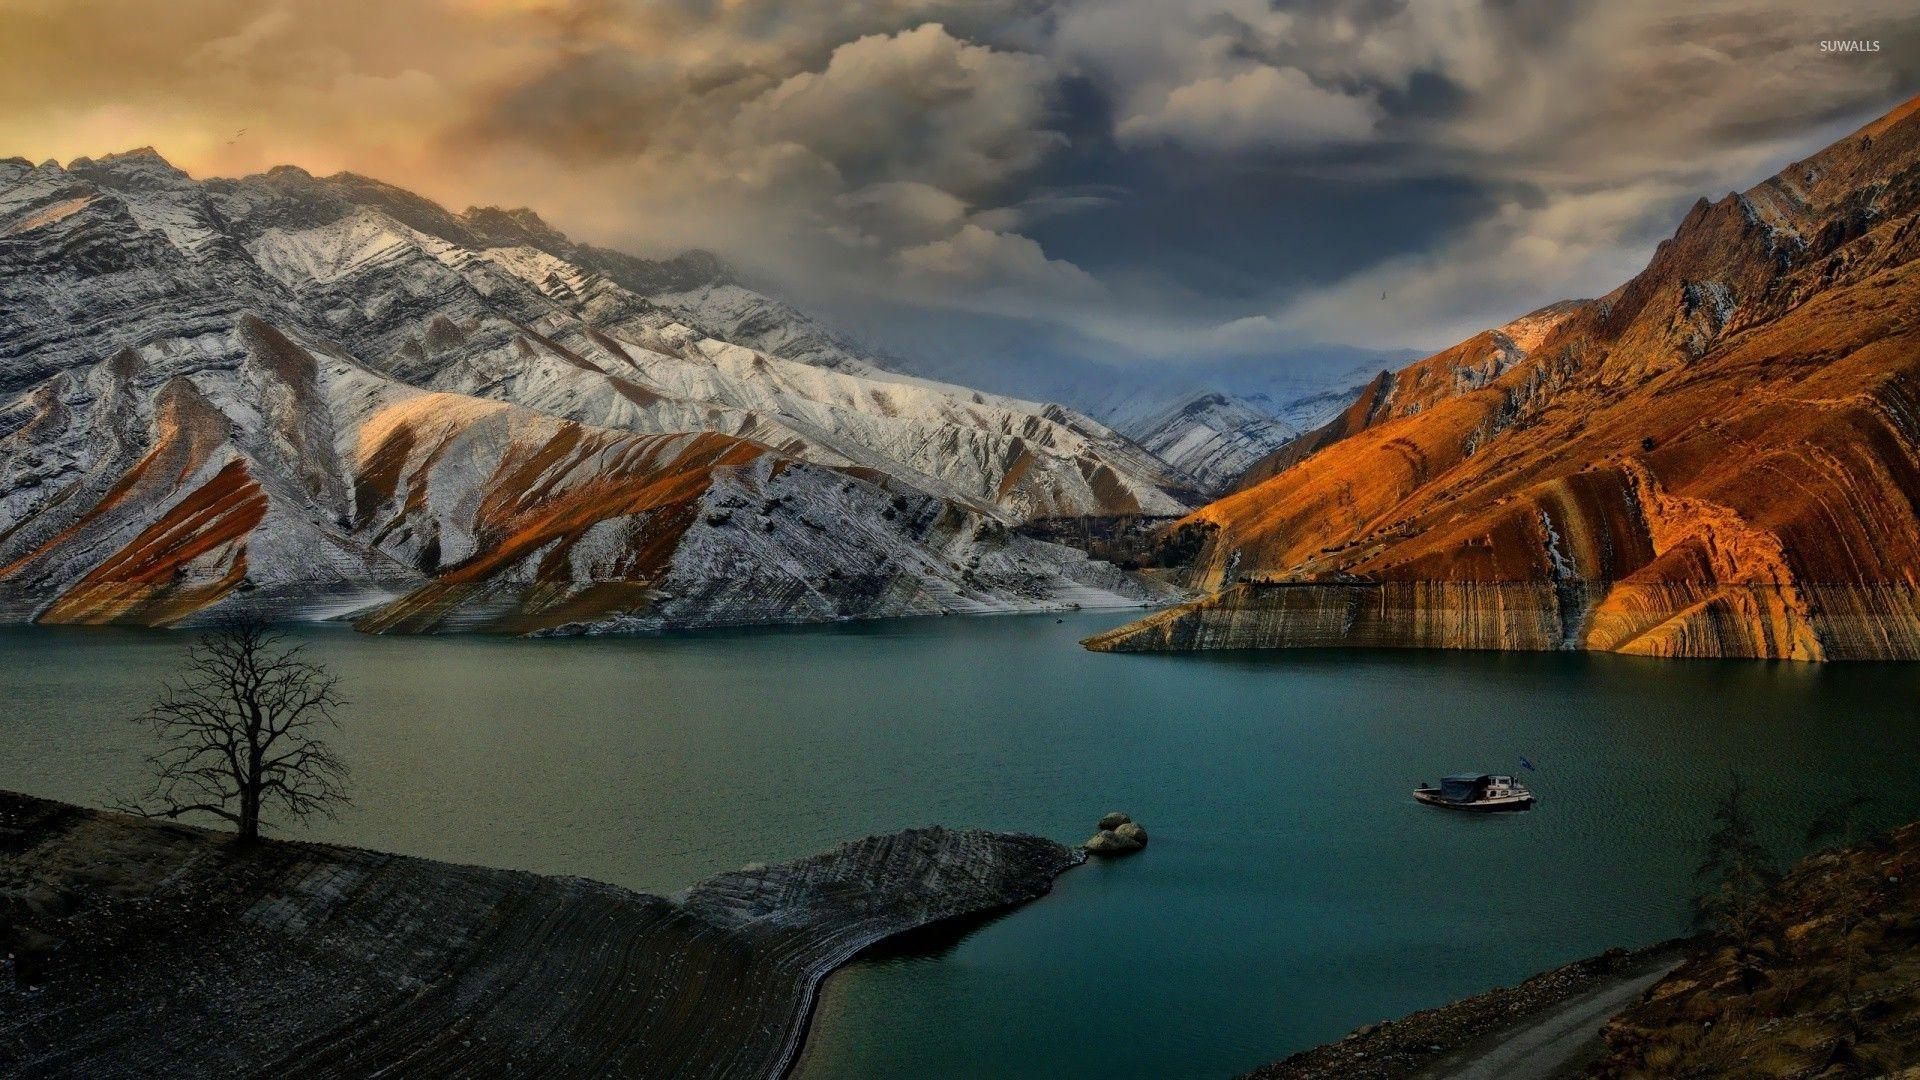 Iran Landscape Wallpapers Top Free Iran Landscape Backgrounds Images, Photos, Reviews